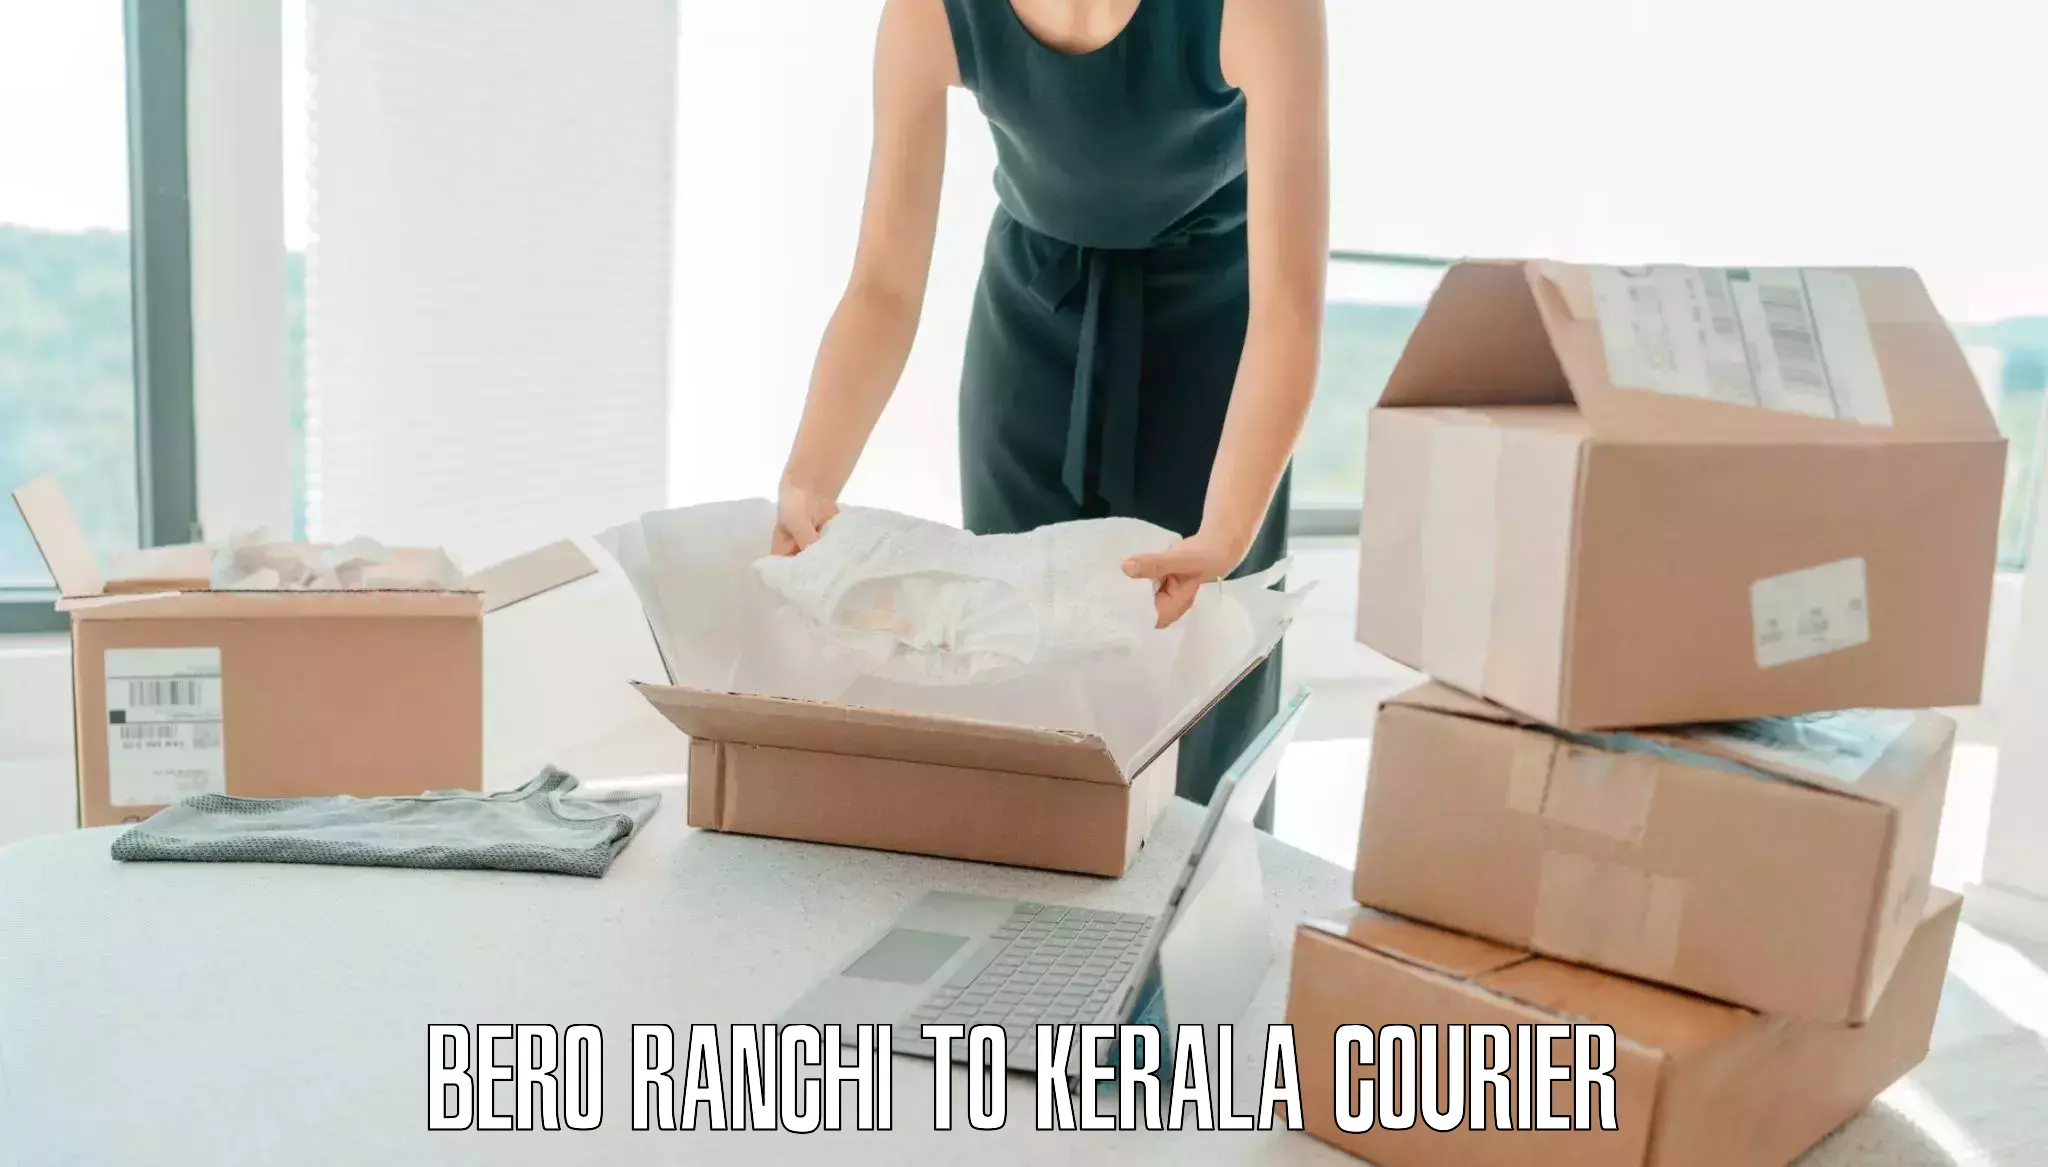 Doorstep luggage collection Bero Ranchi to Palai